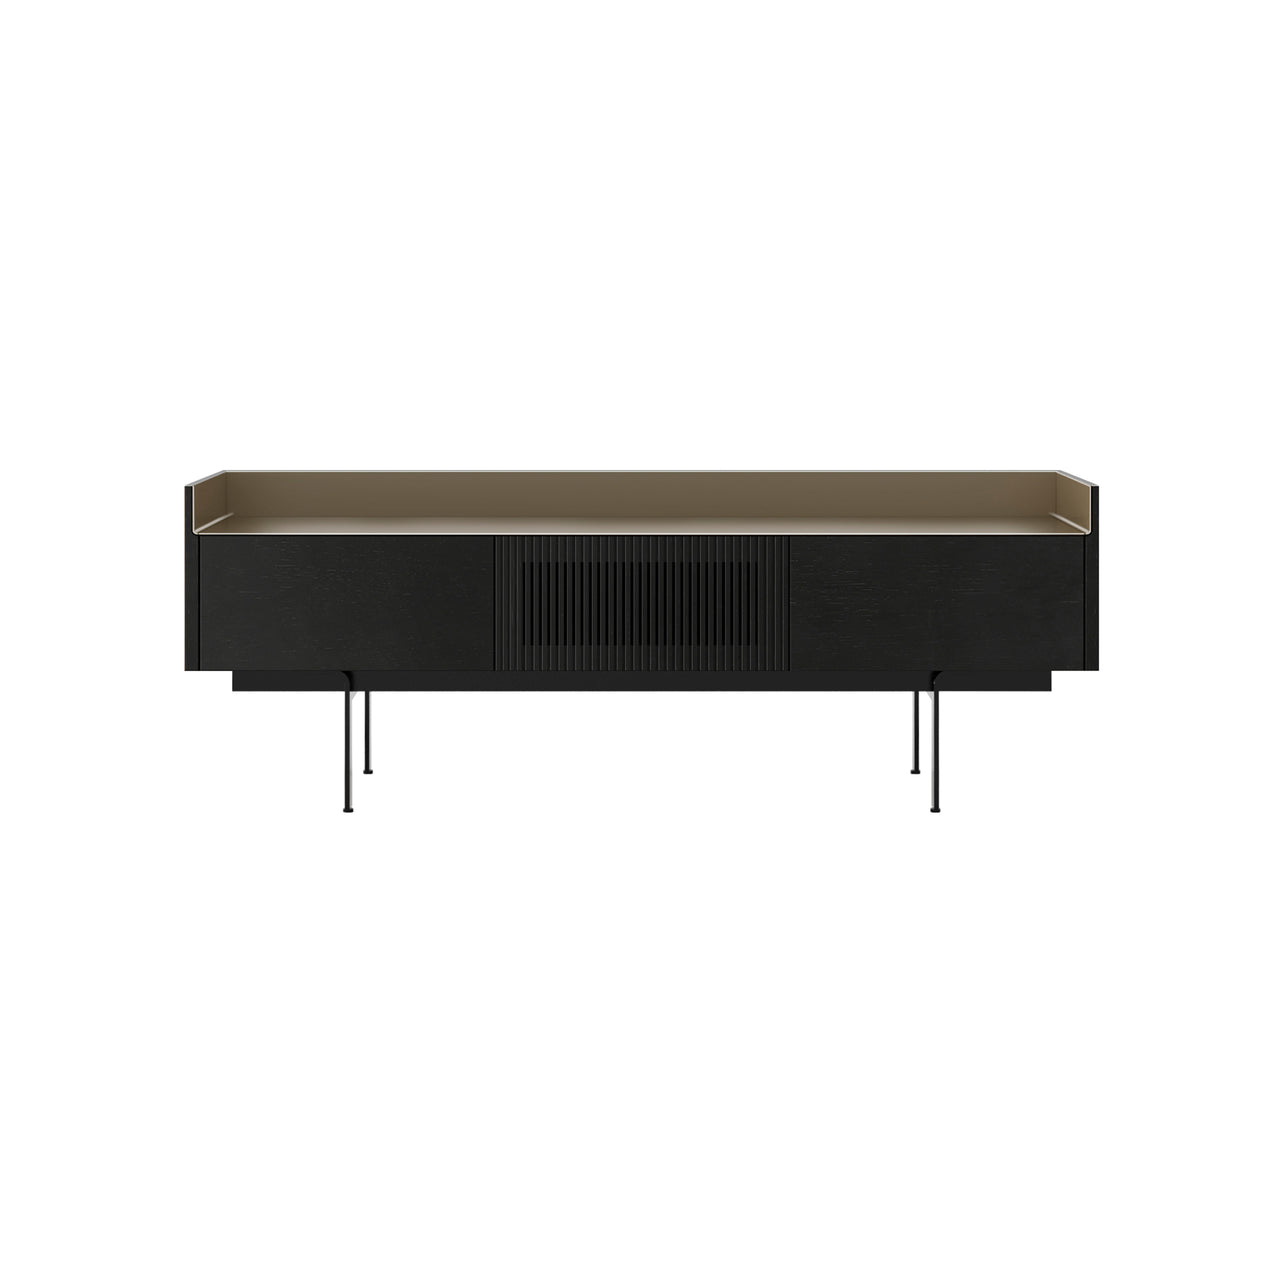 Stockholm Slim Sideboard: STH353 + Ebony Stained Oak + Anodized Aluminum Bronze + Black